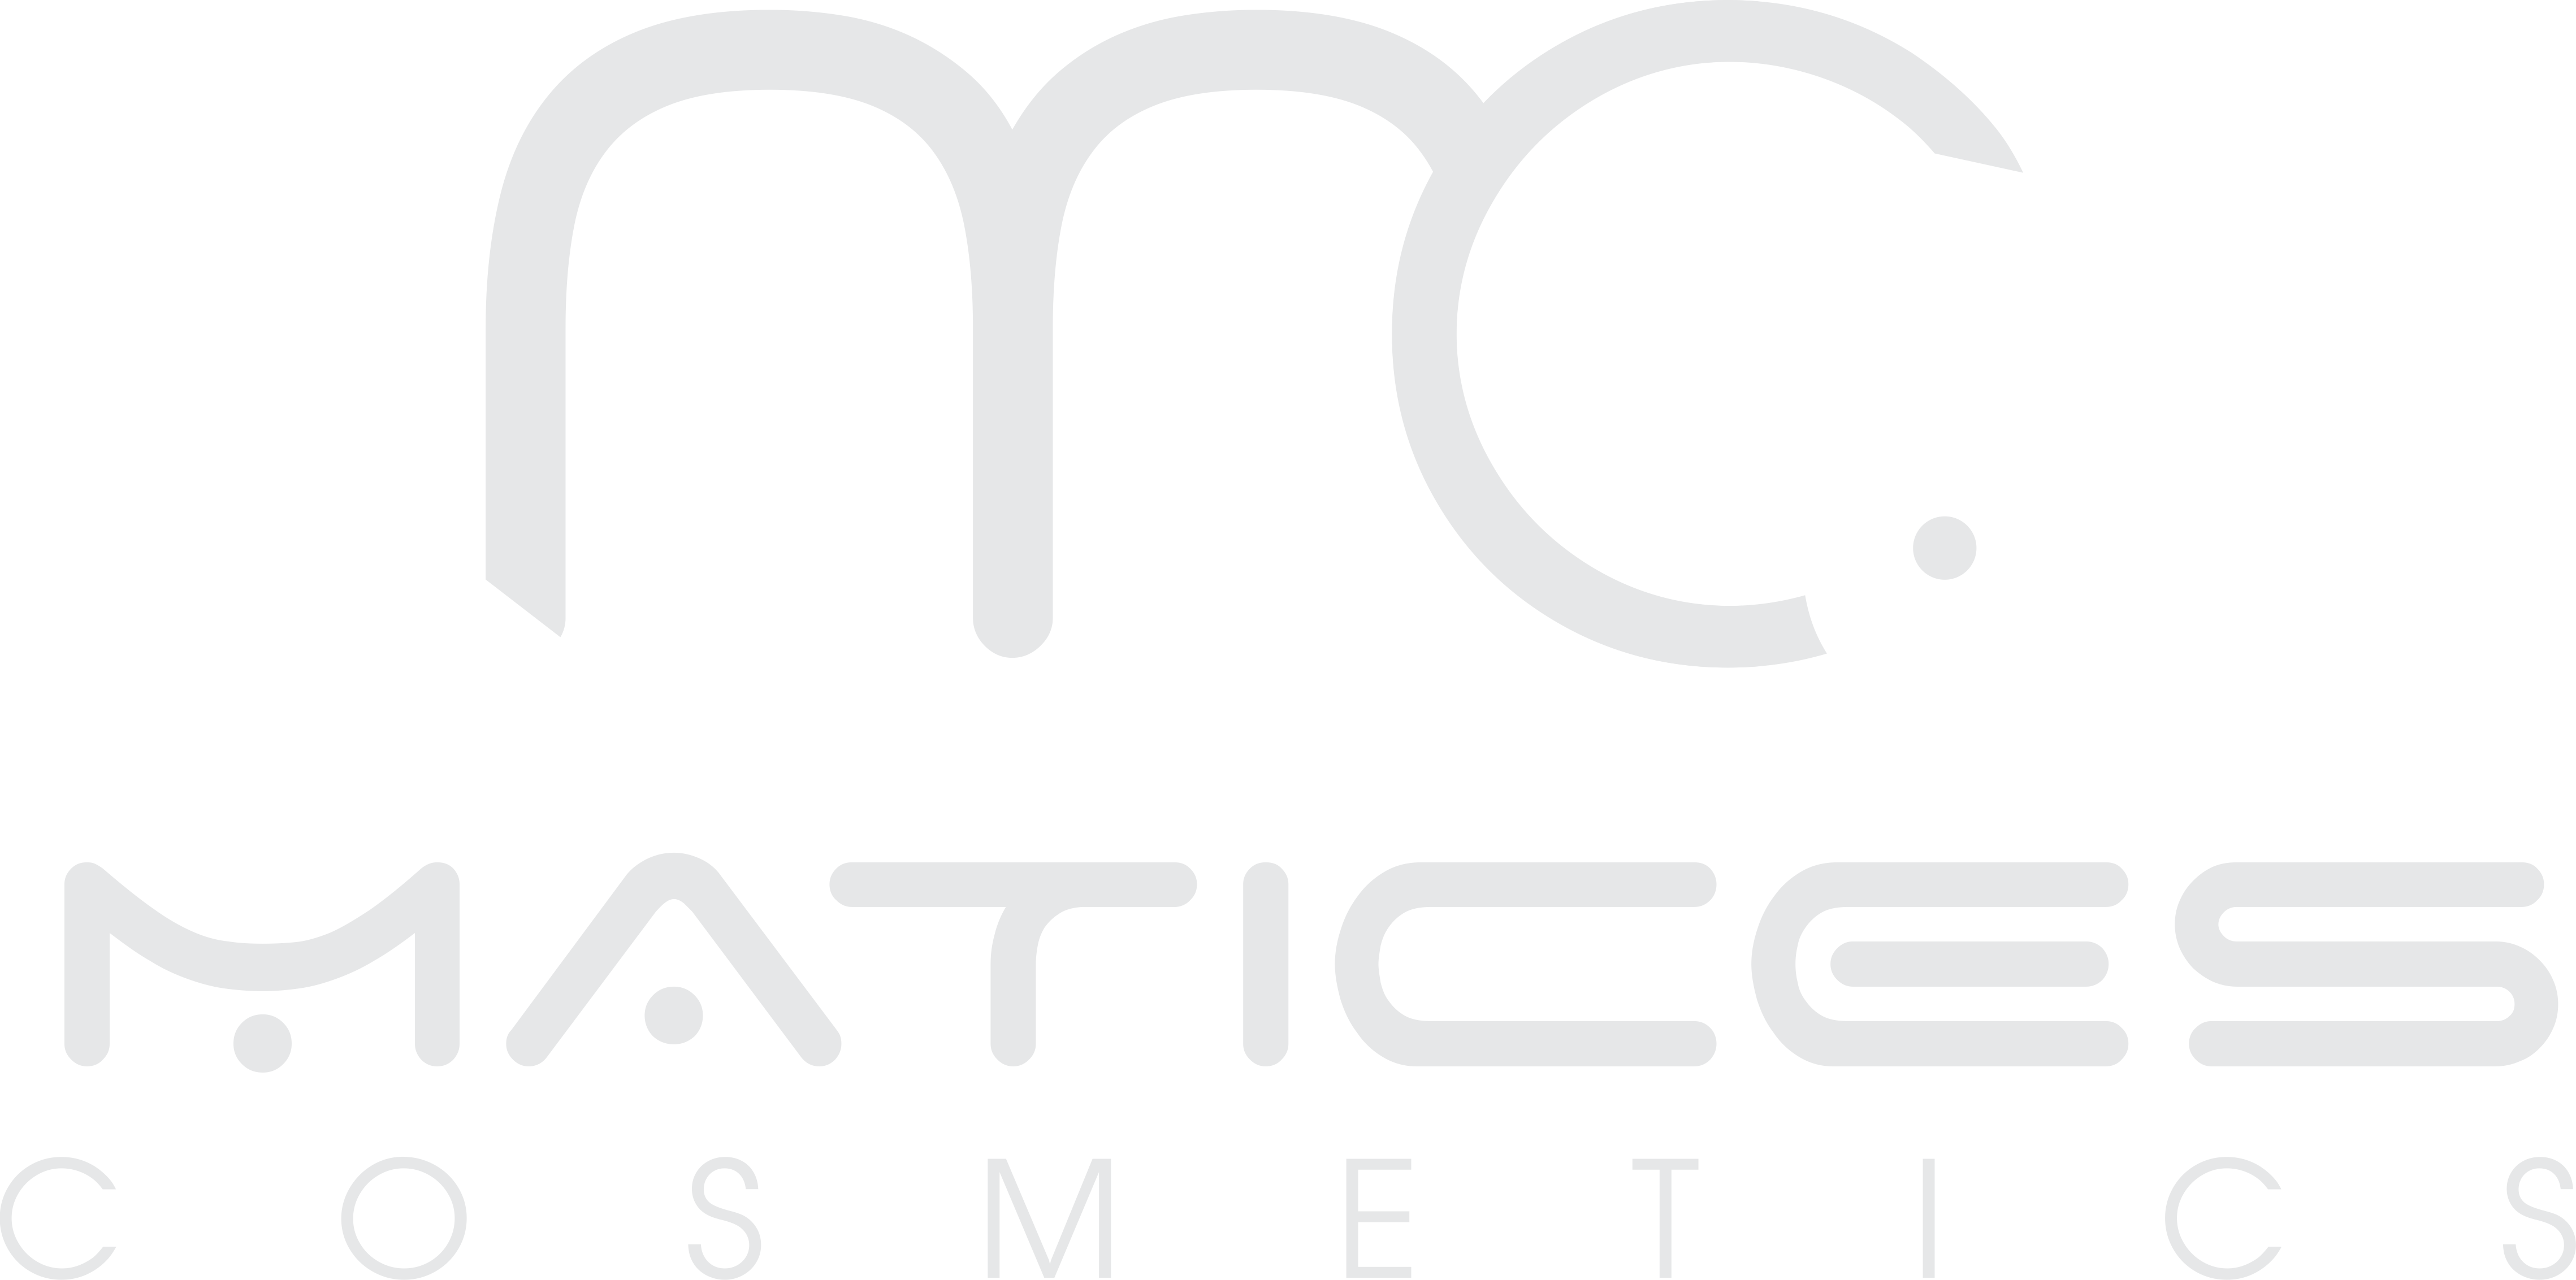 Matices Cosmetics